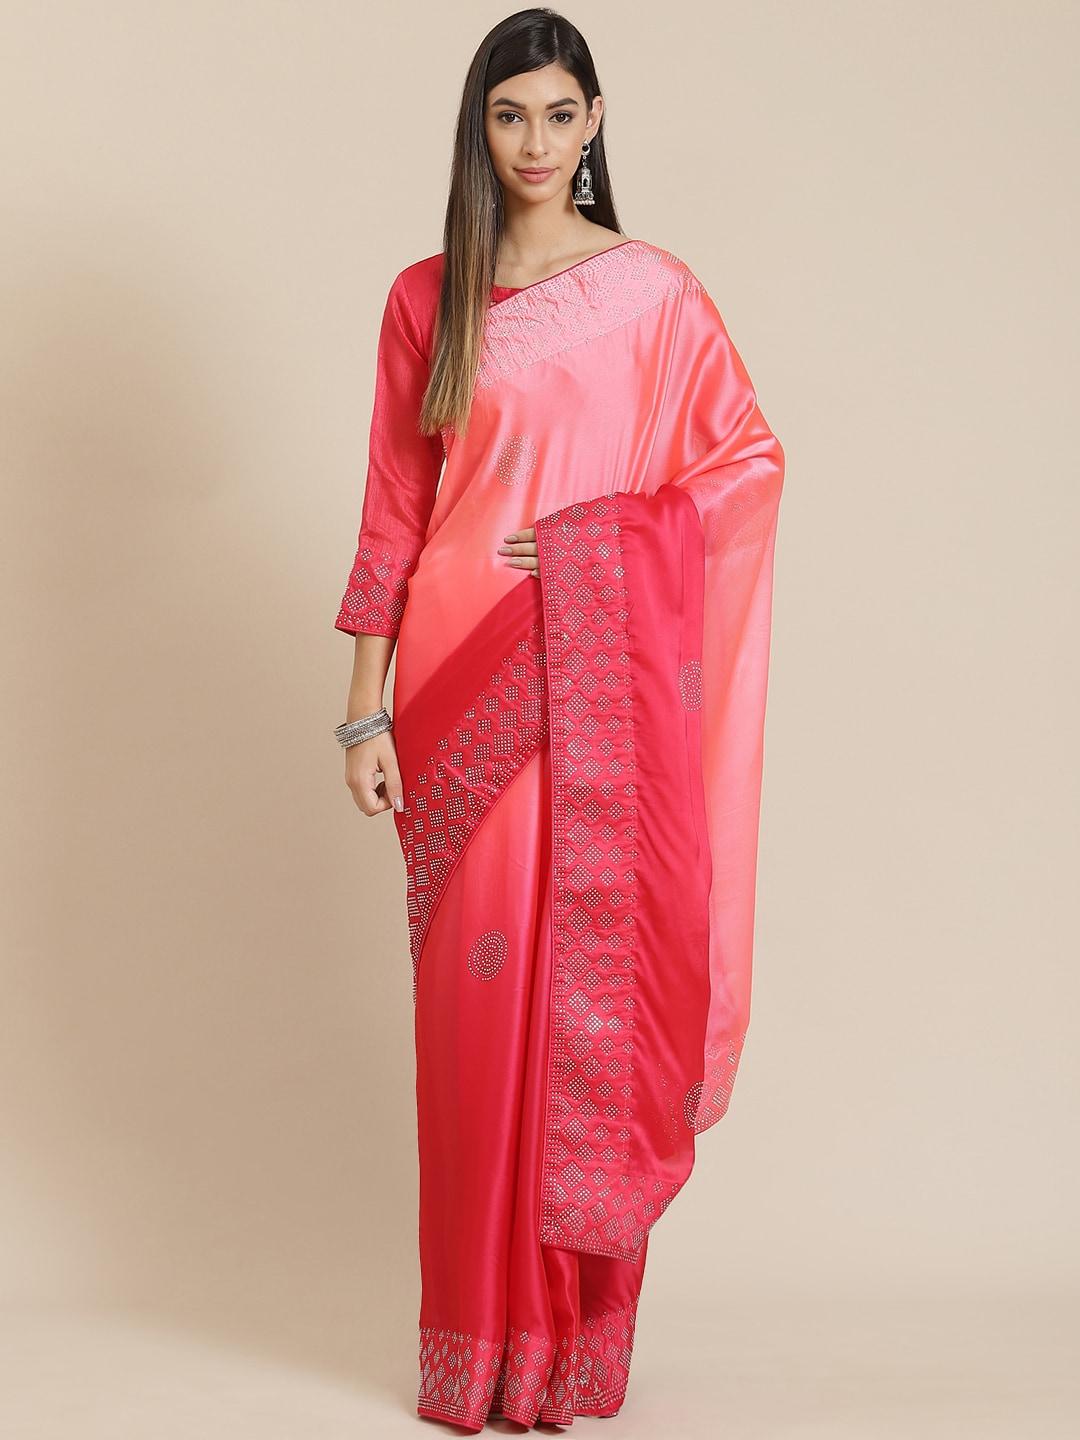 serona fabrics red & pink mirror work saree